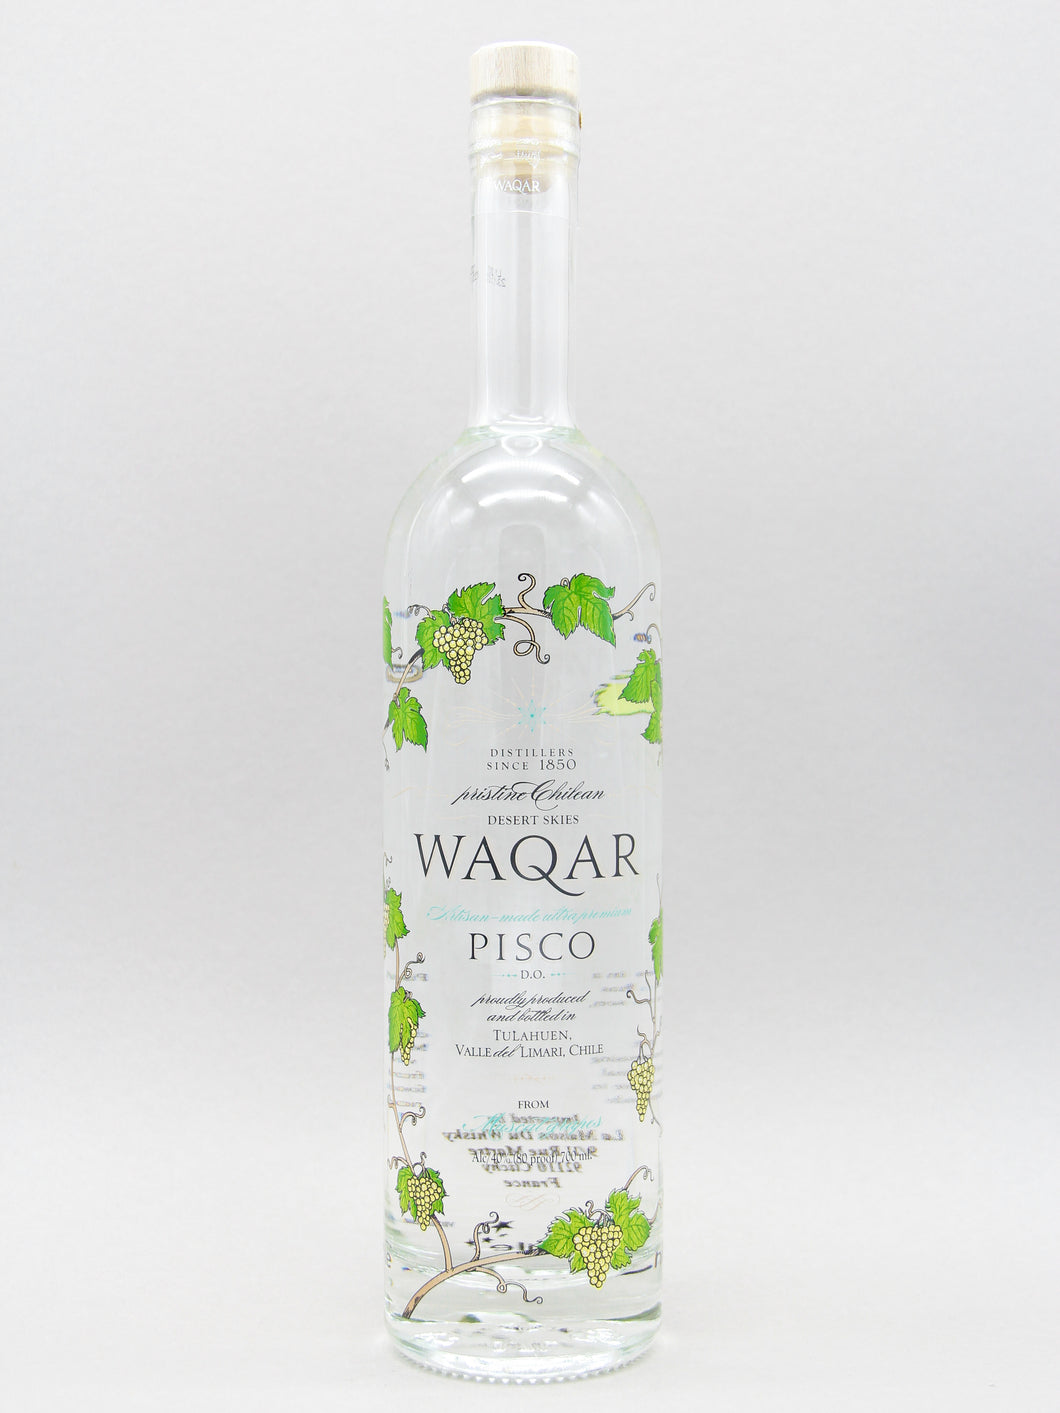 Pisco Waqar Muscat Grape, Chile (40%, 70cl)